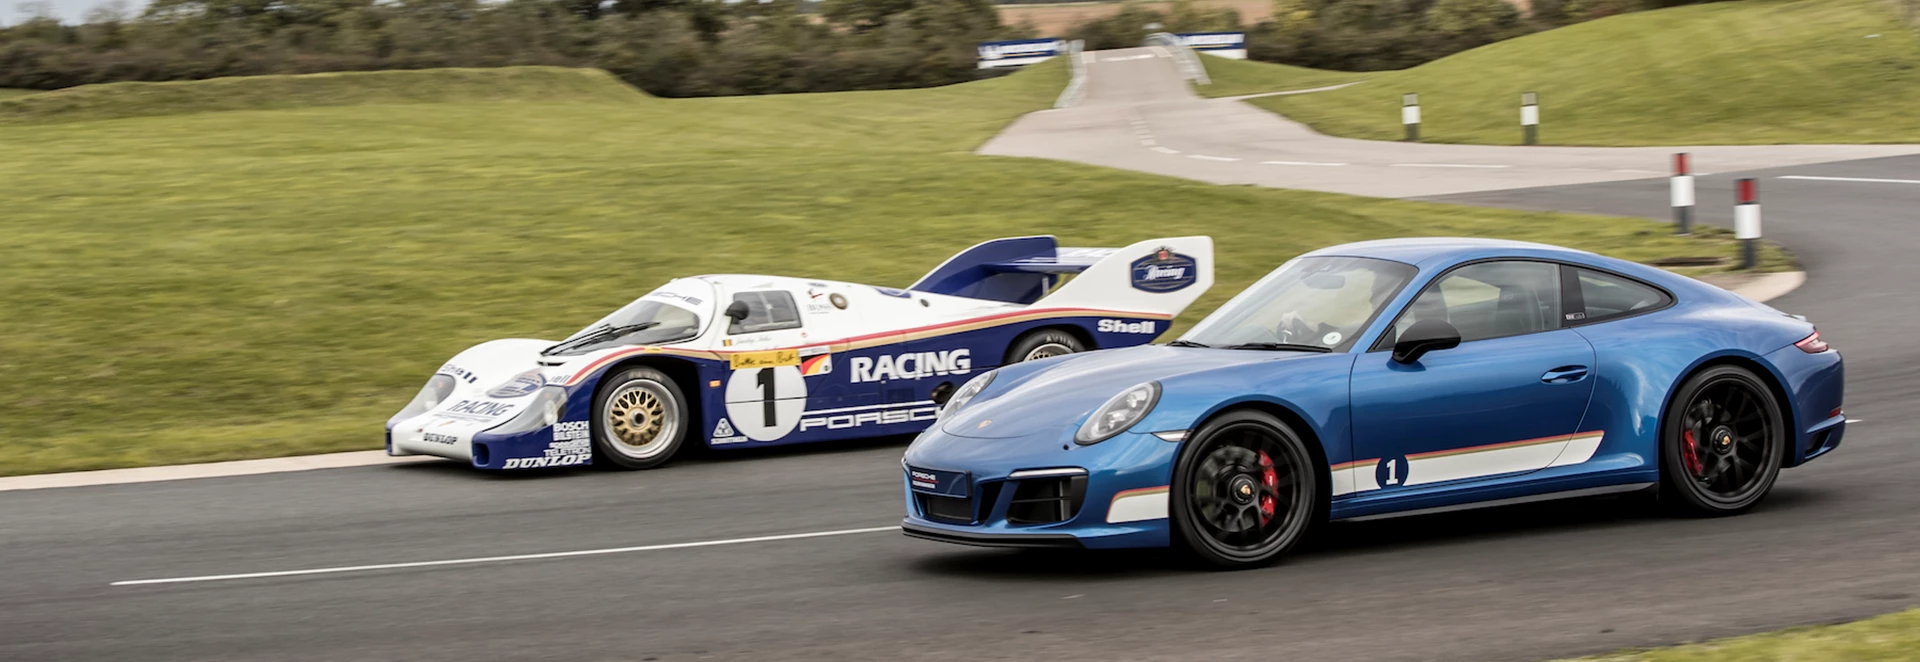 Porsche reveals Le Mans-inspired special edition Carrera 